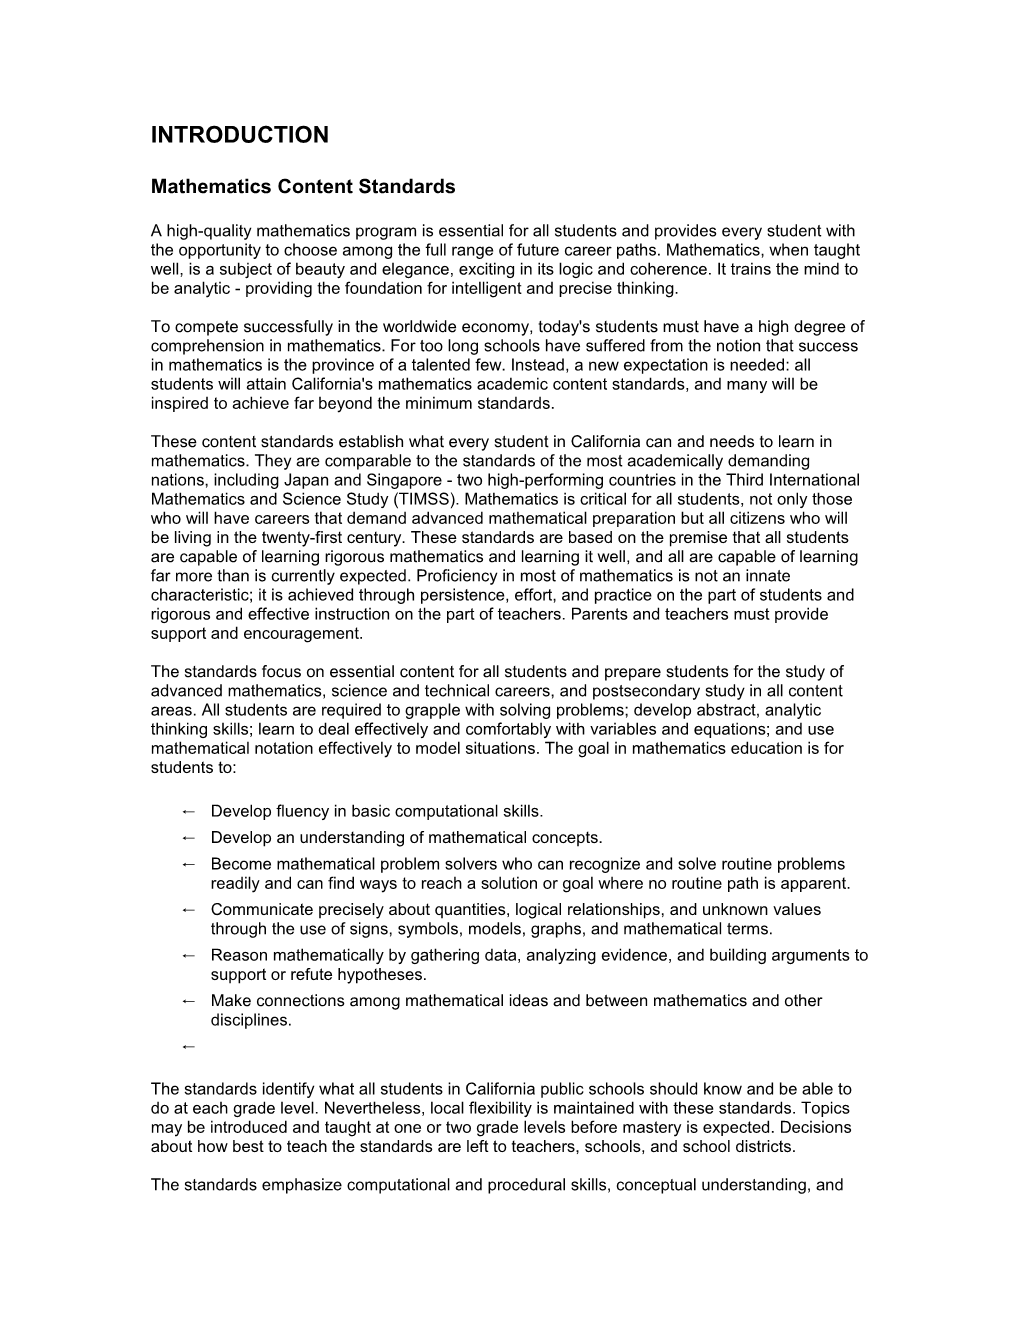 Mathematics Content Standards - Content Standards (CA Dept of Education)